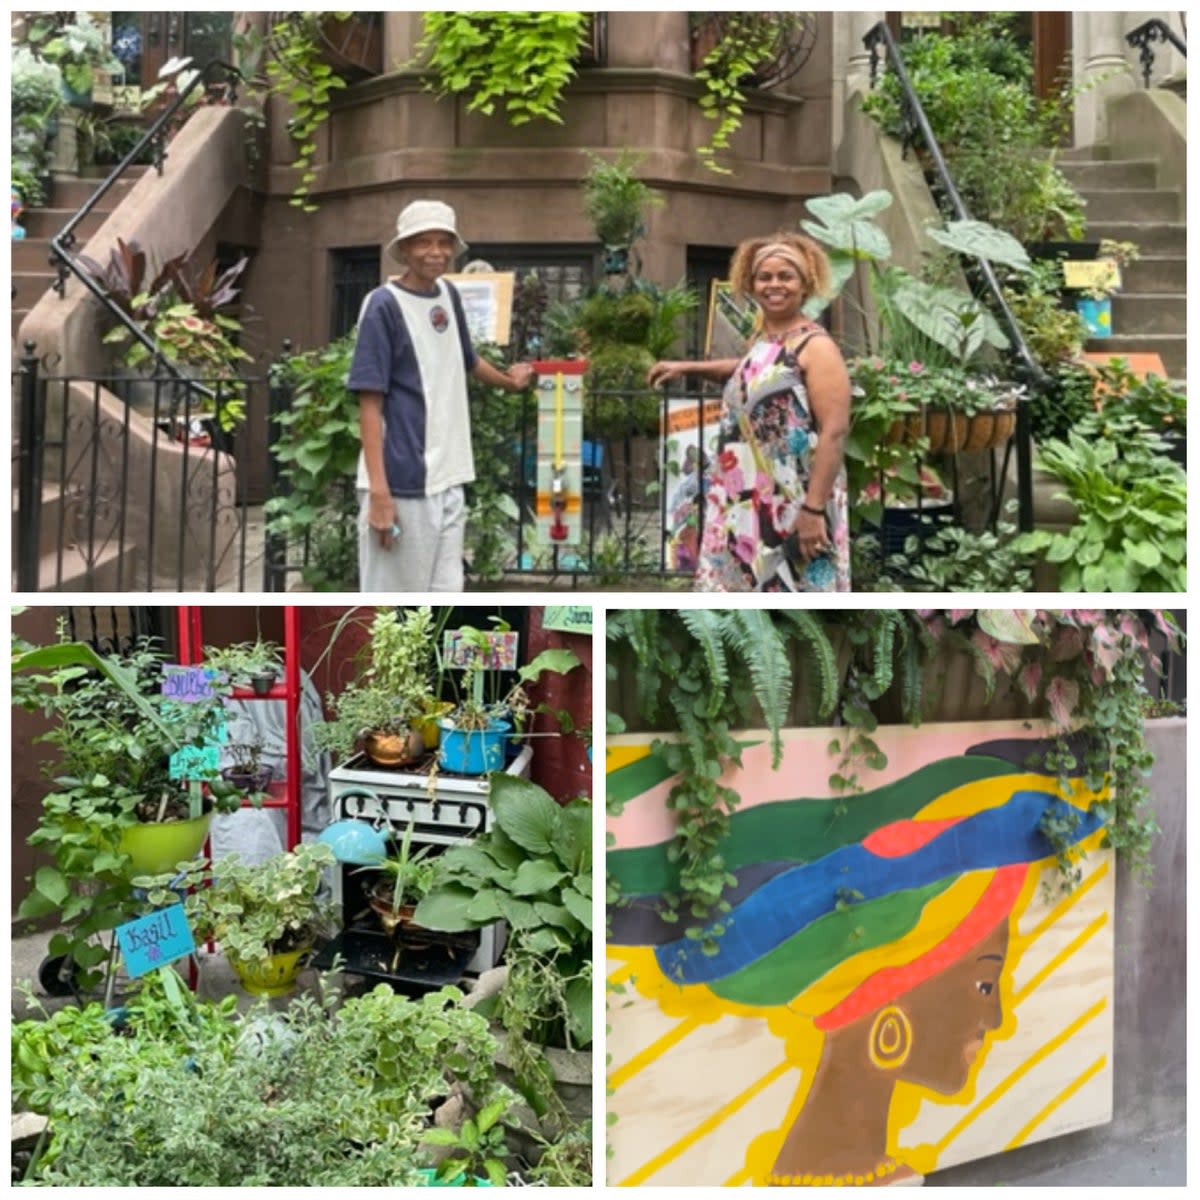 The ‘greenest block’ in Brooklyn (Louise Boyle)